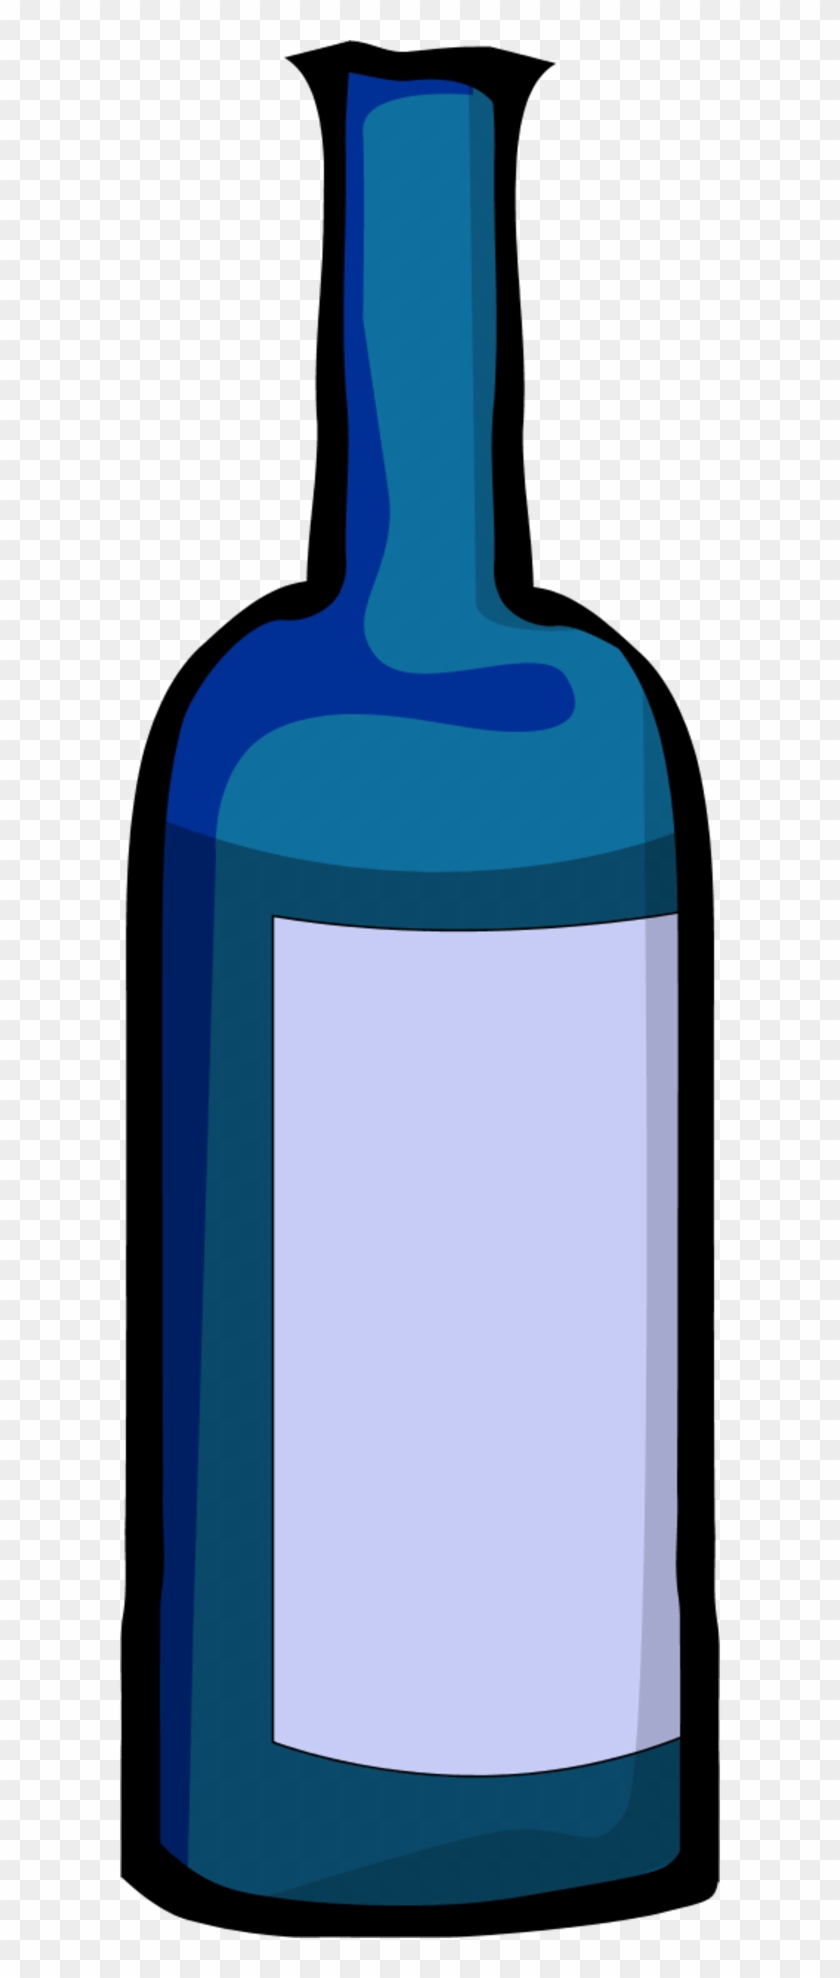 Wine Bottle Clipart - Blue Wine Bottle Clip Art #206895